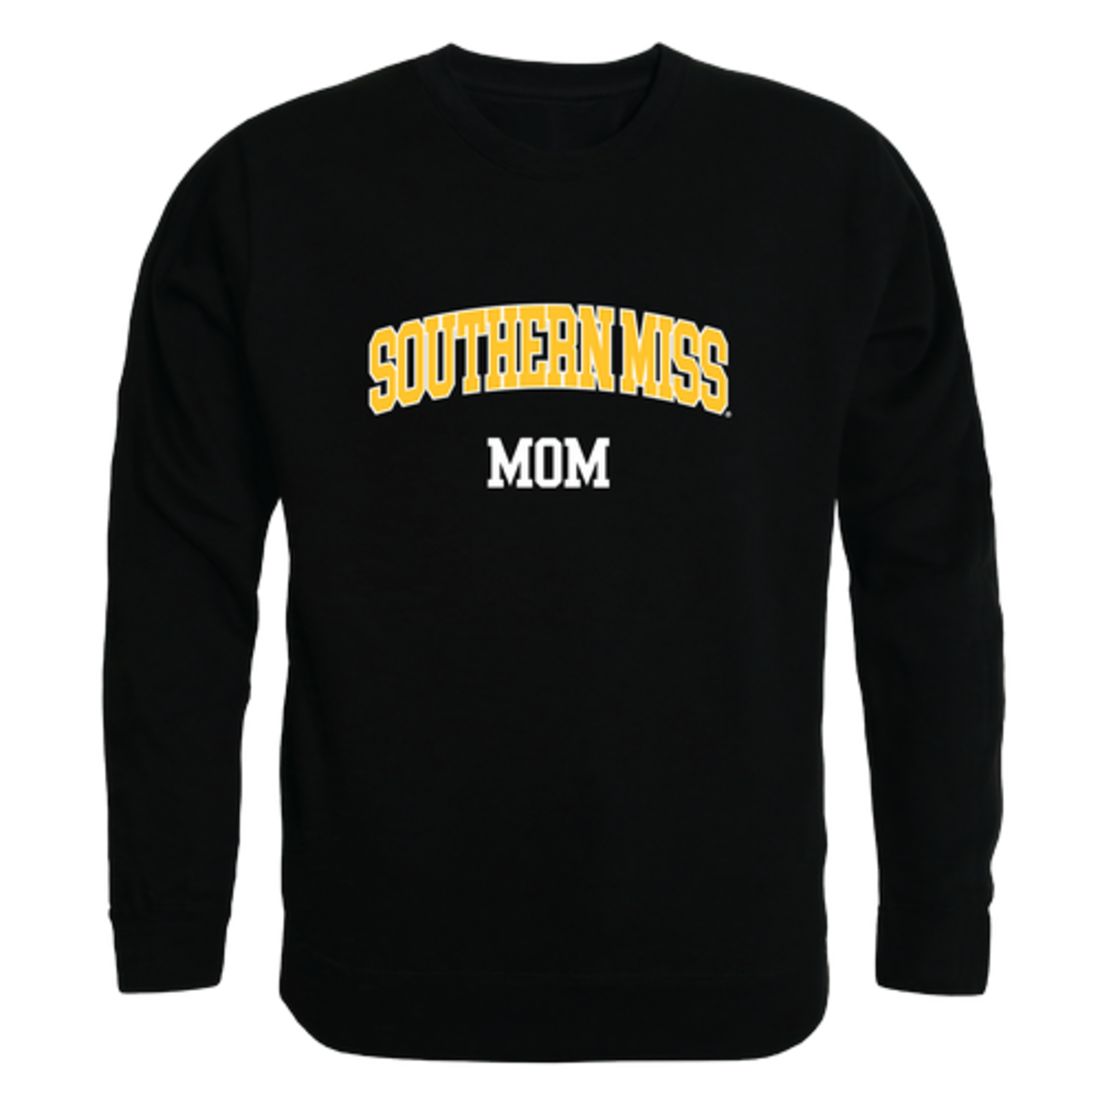 USM University of Southern Mississippi Golden Eagles Mom Fleece Crewneck Pullover Sweatshirt Black Small-Campus-Wardrobe